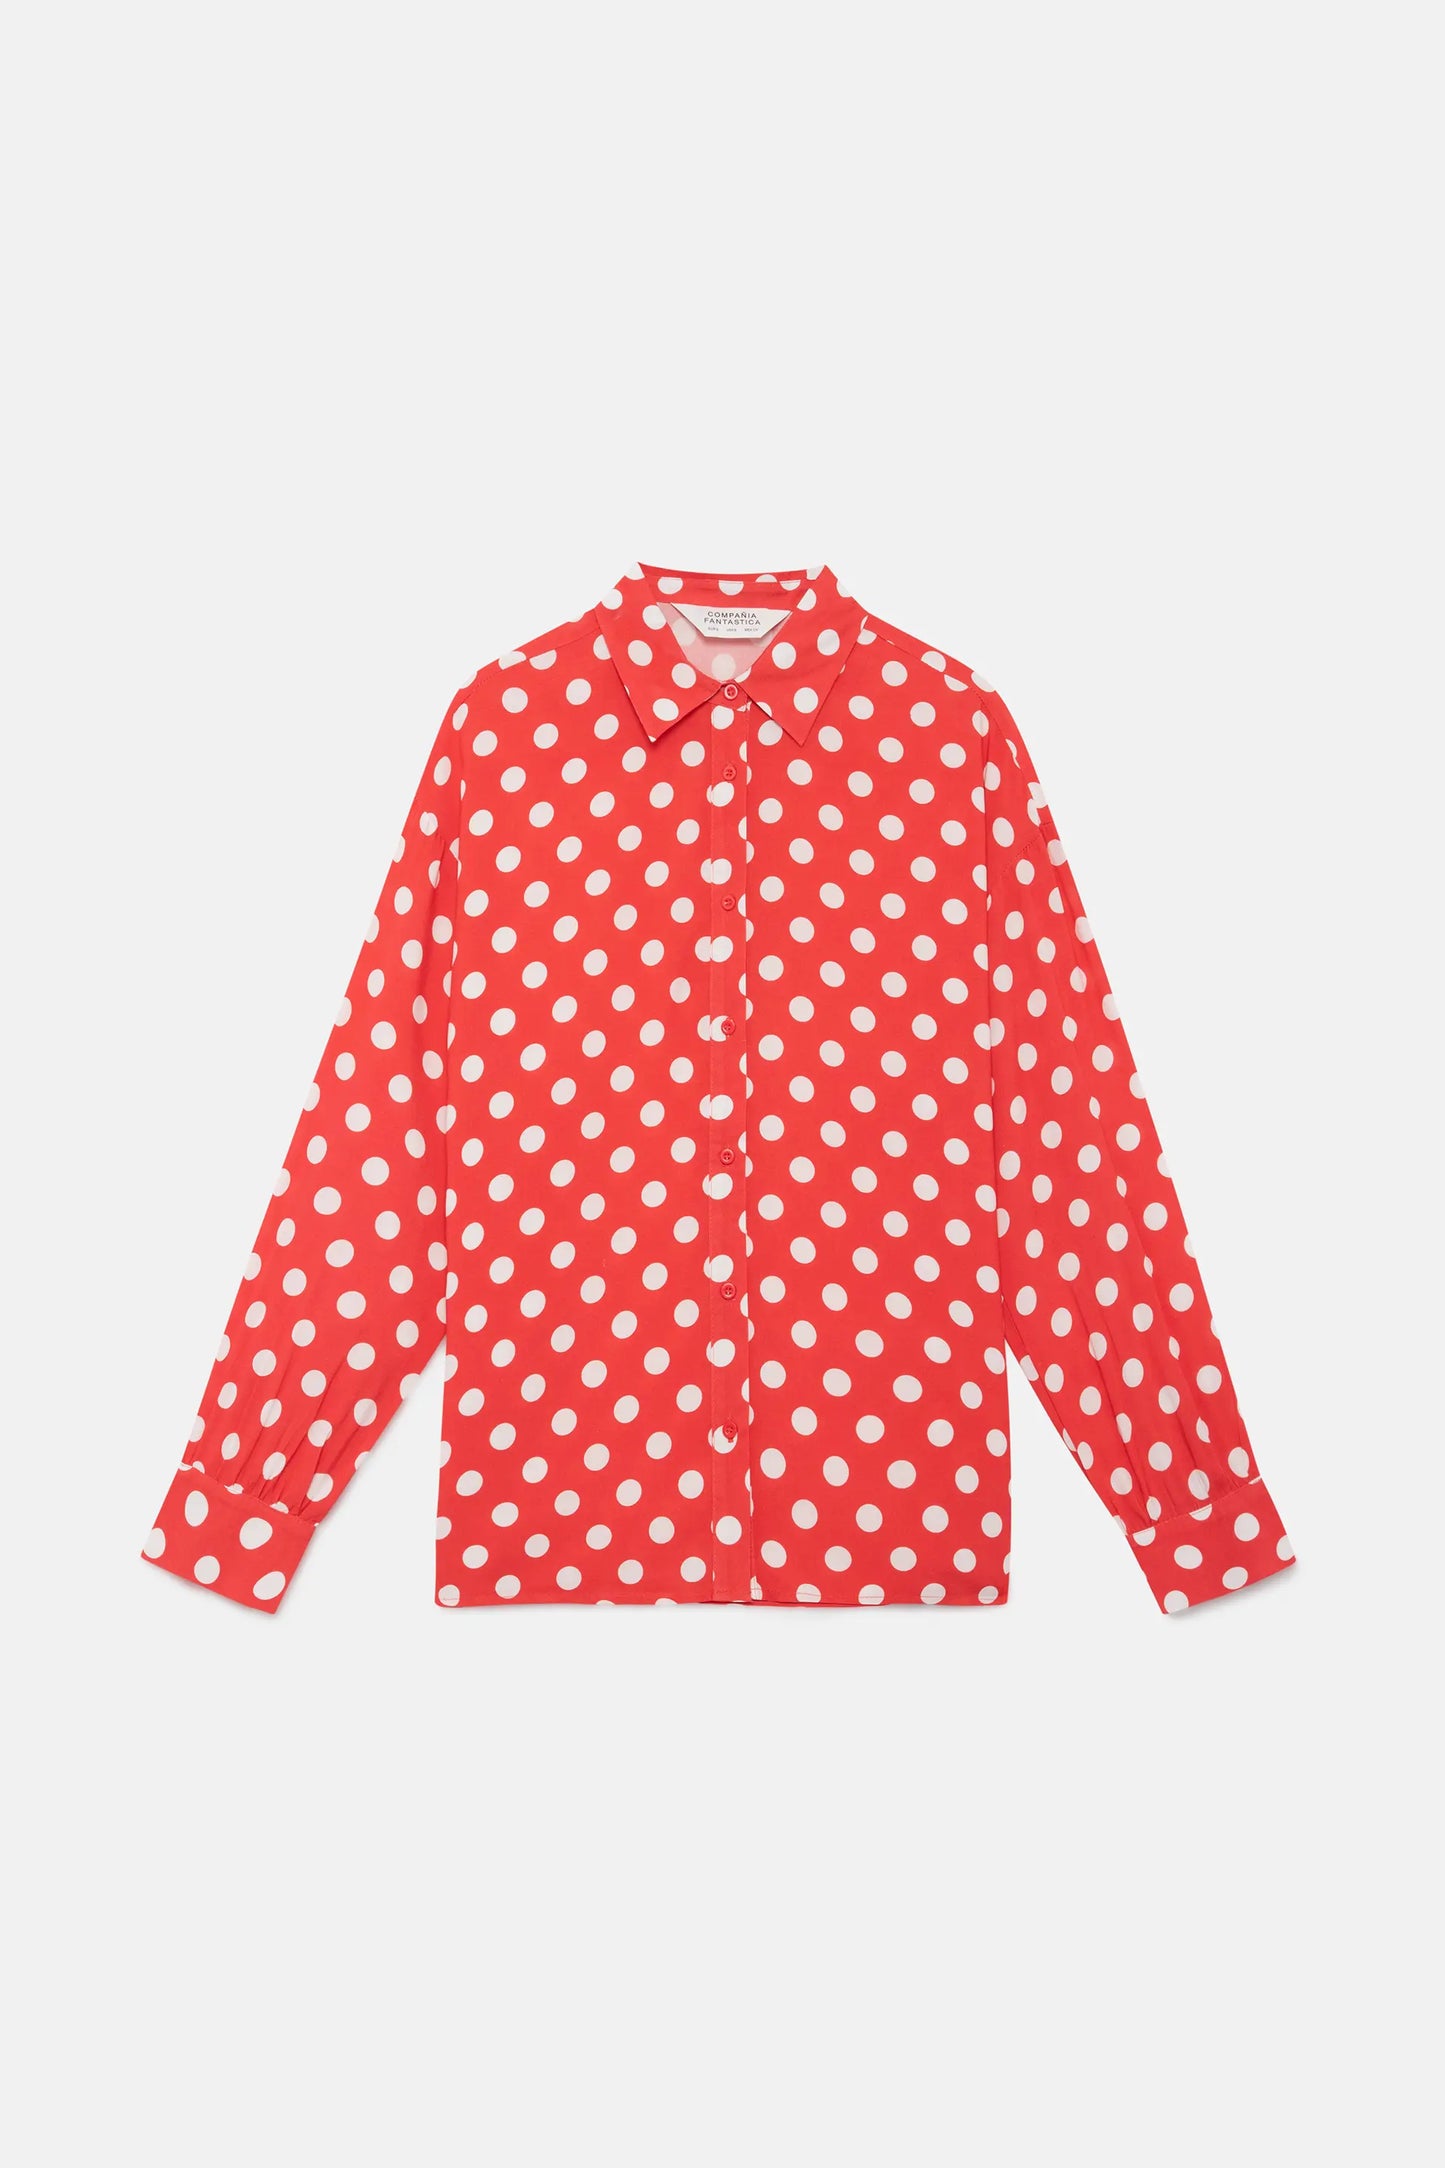 Red polka dot shirt